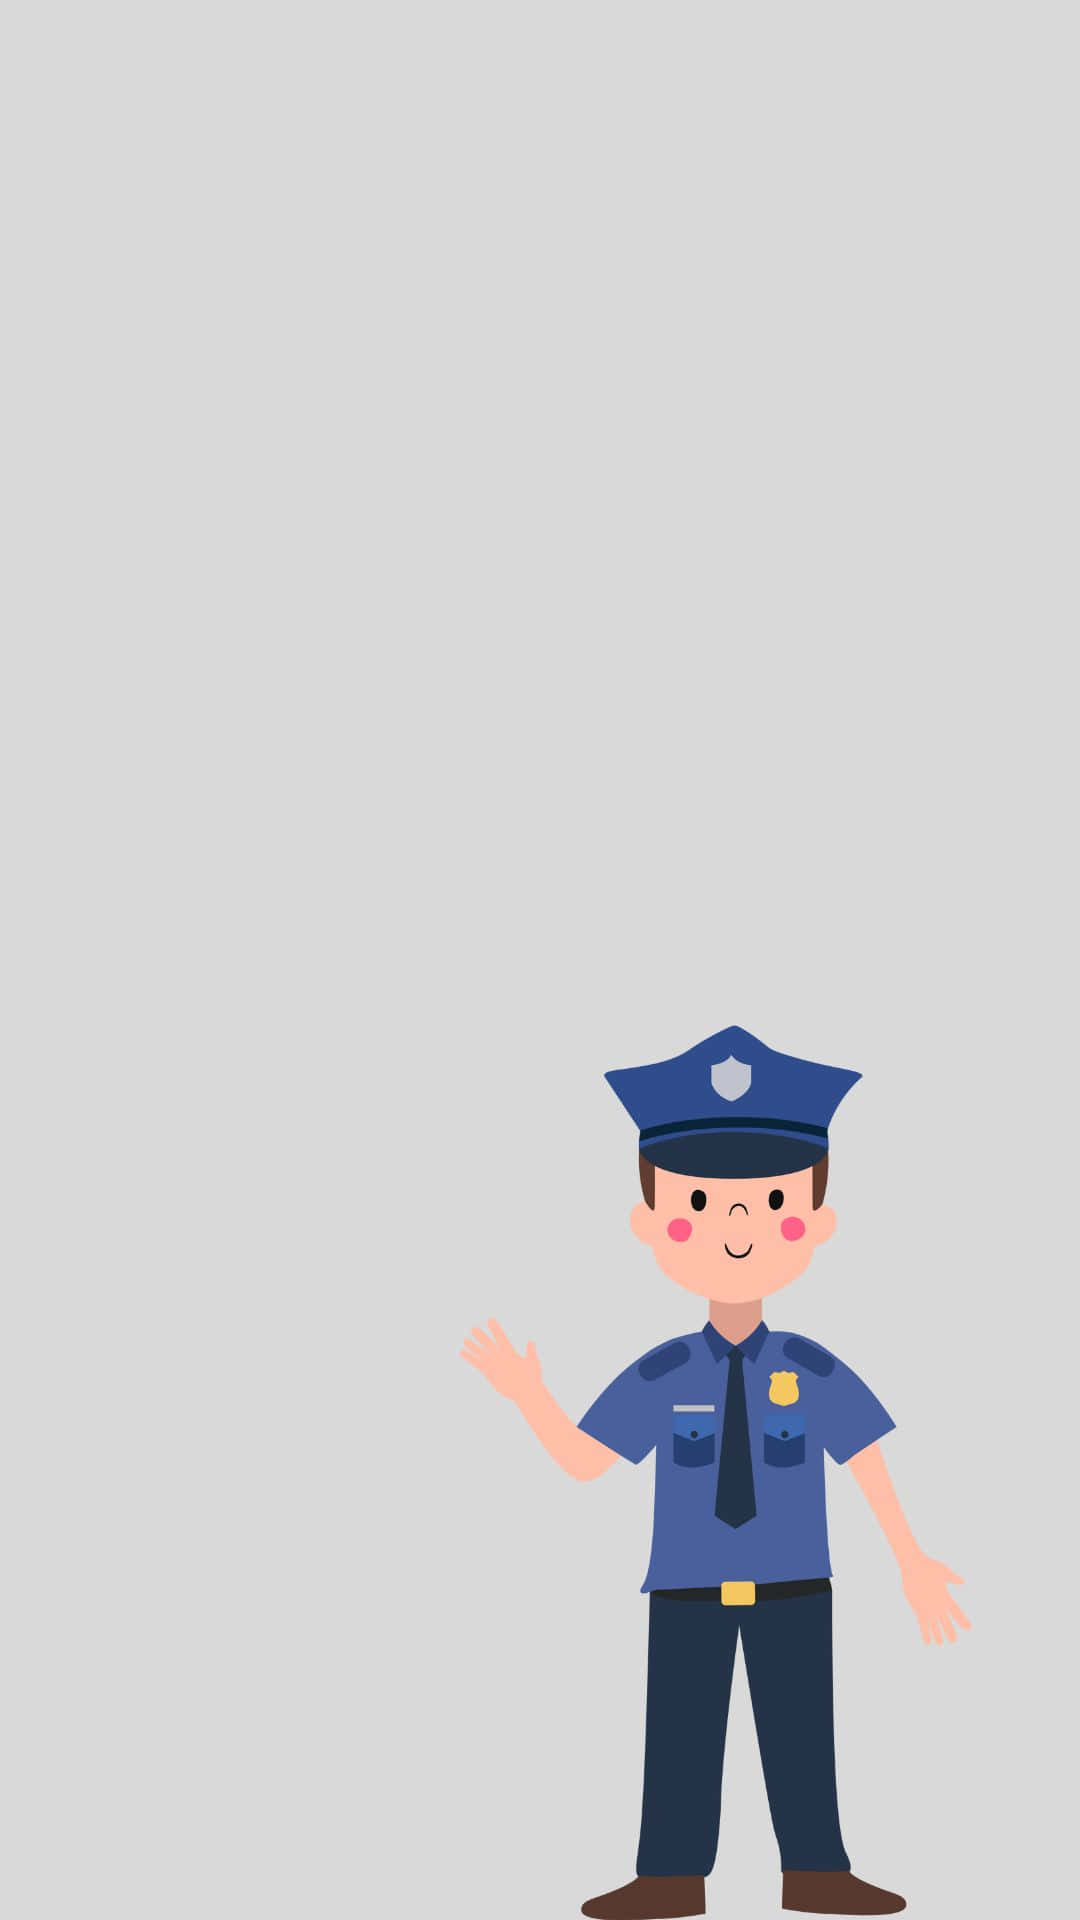 Digital Artwork Of A Cop Smiling And Waving